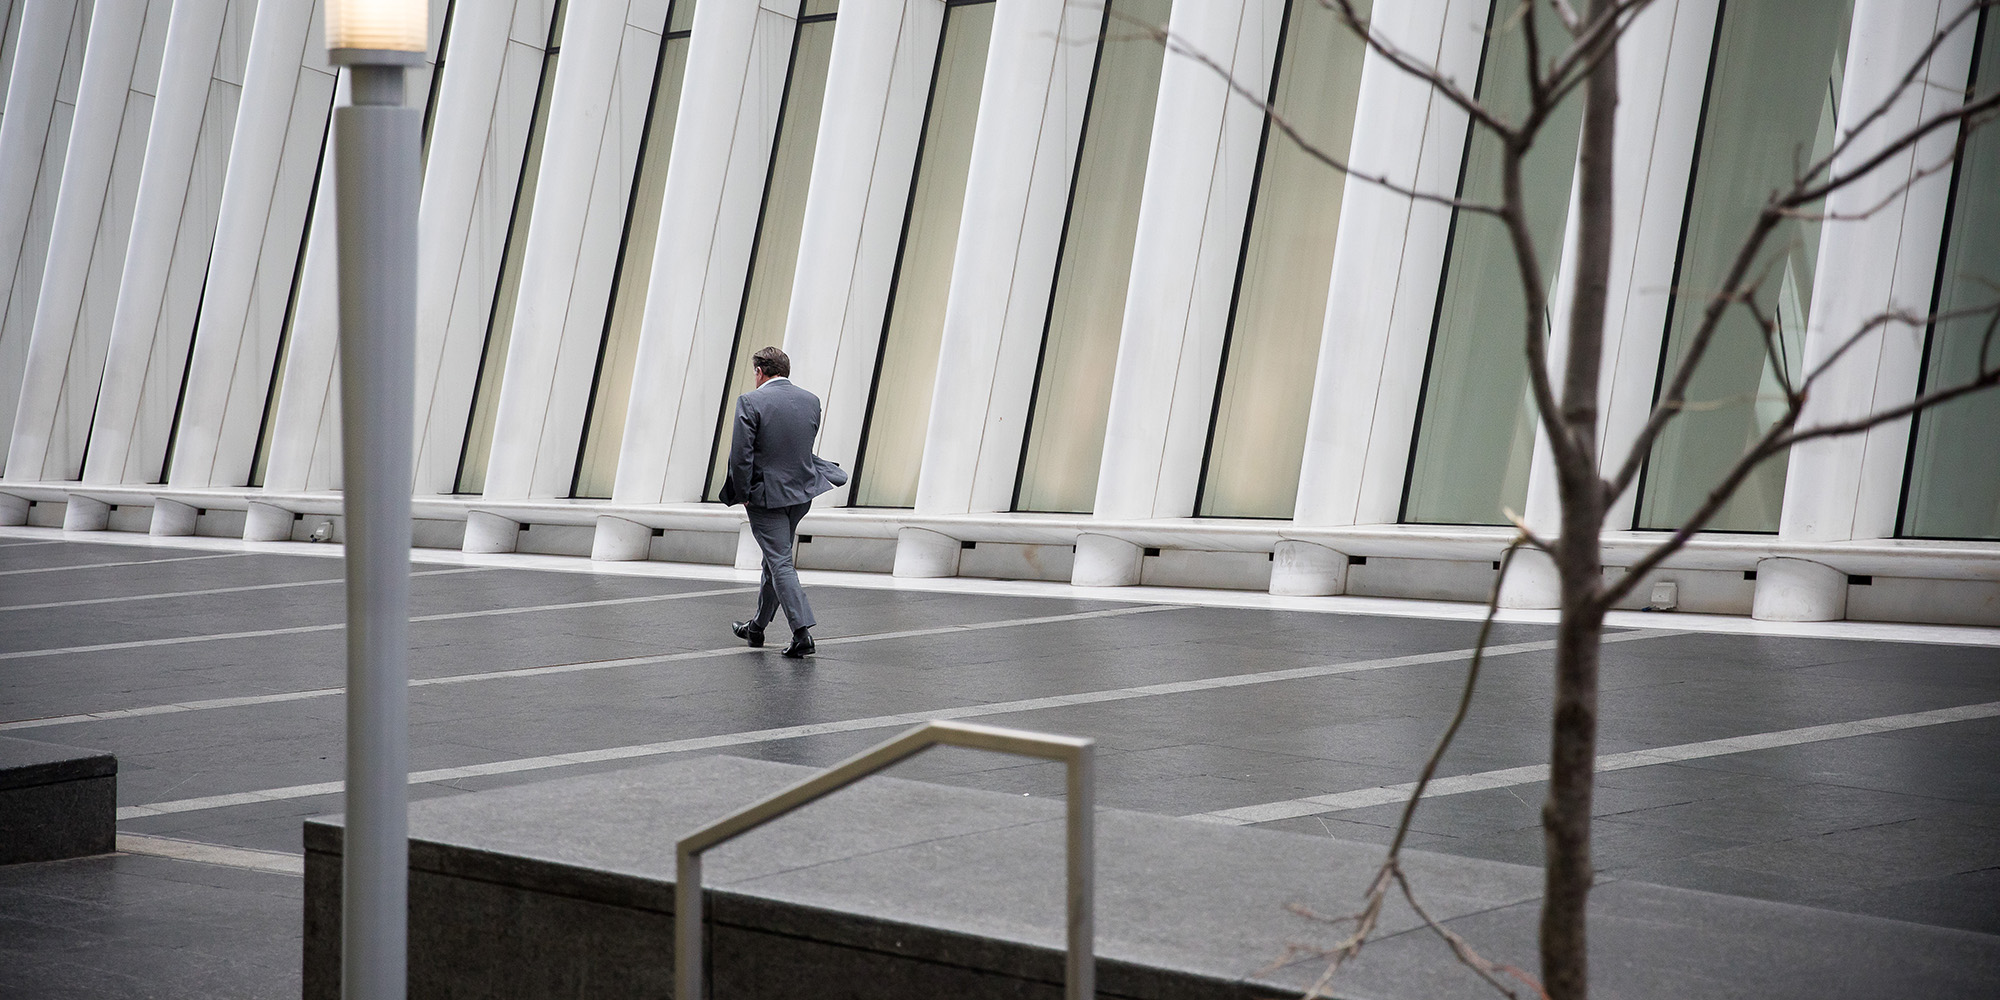 A pedestrian walks past the Oculus transportation hub in New York.